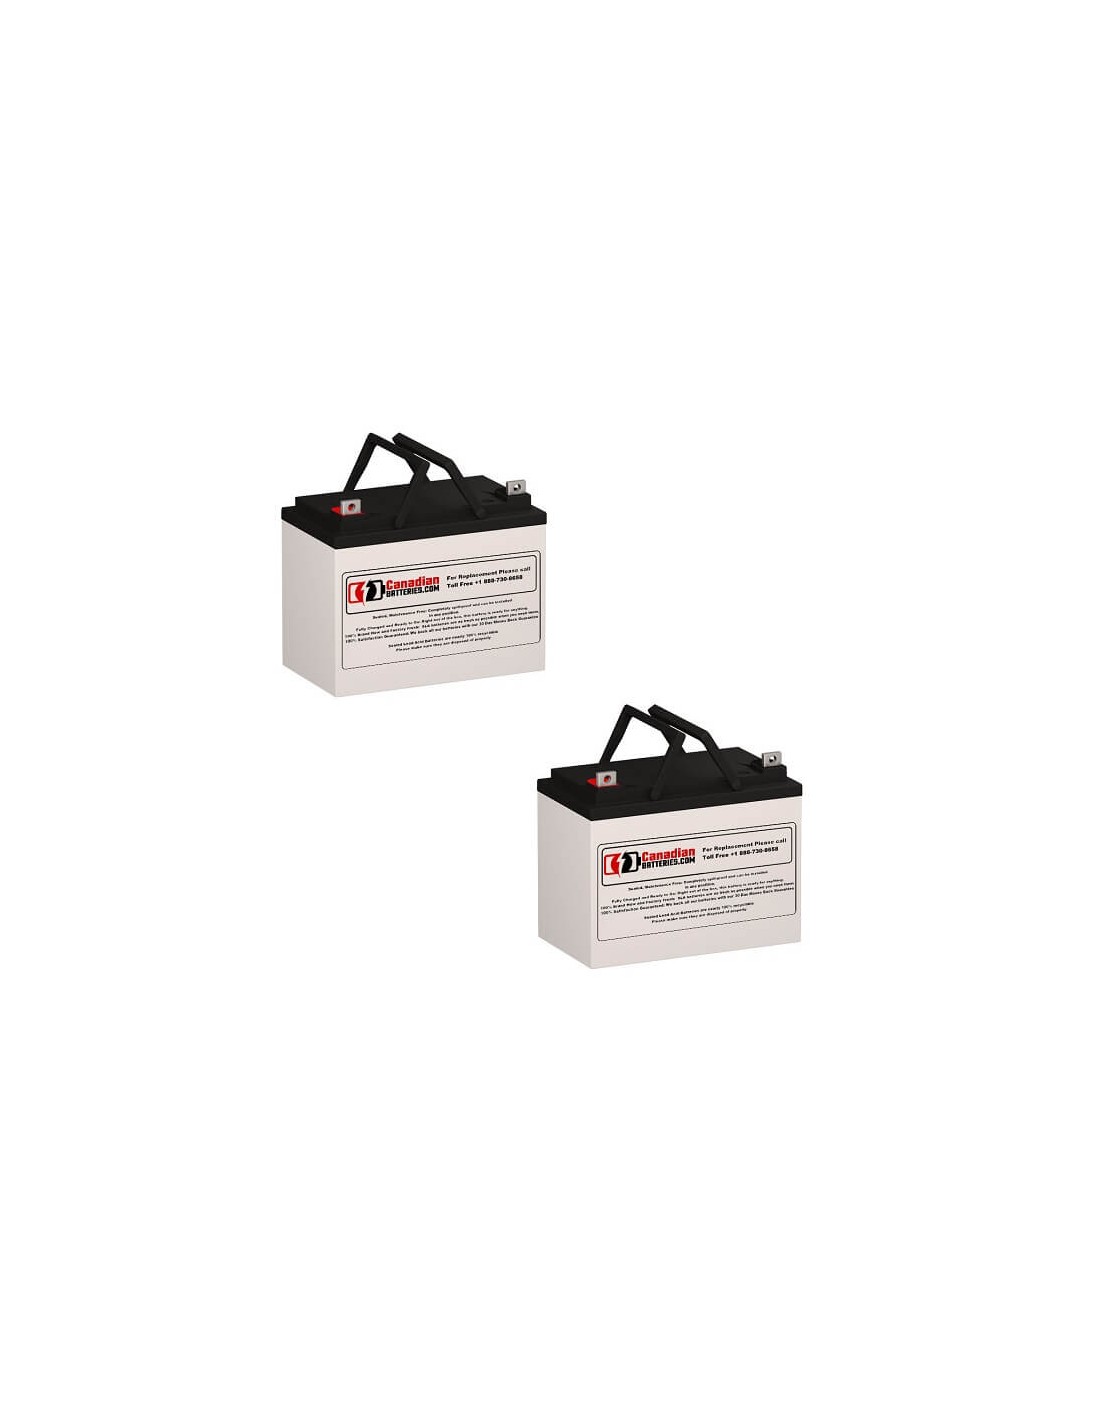 Batteries for Sola 800a Sola UPS, 2 x 12V, 33Ah - 396Wh